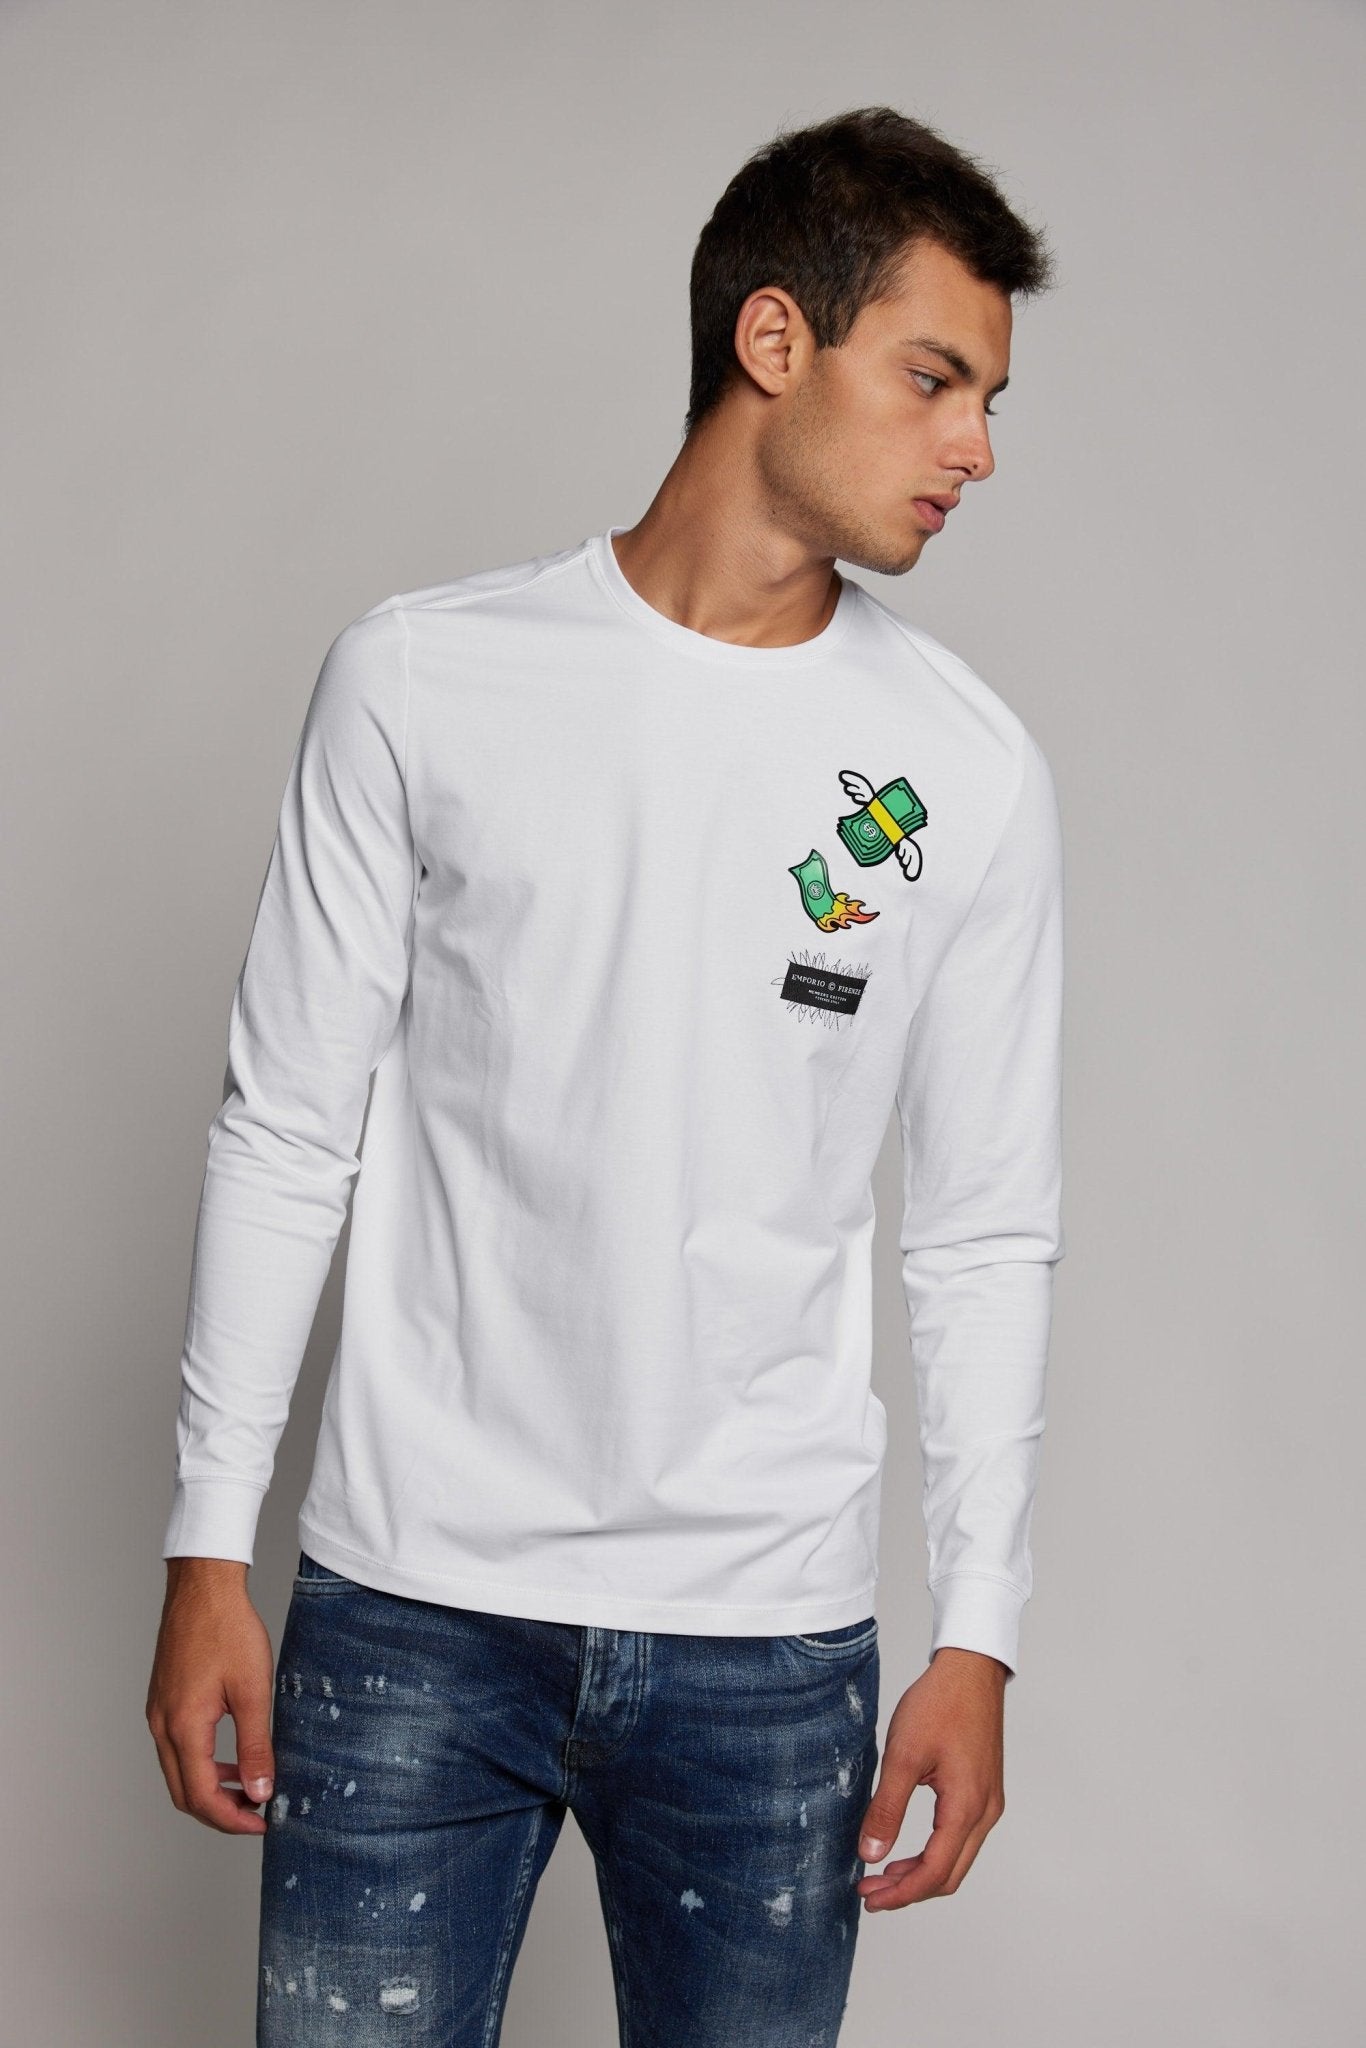 EMPORIO VALENTINI - חולצה בצבע לבן עם הדפס דולרים - MASHBIR//365